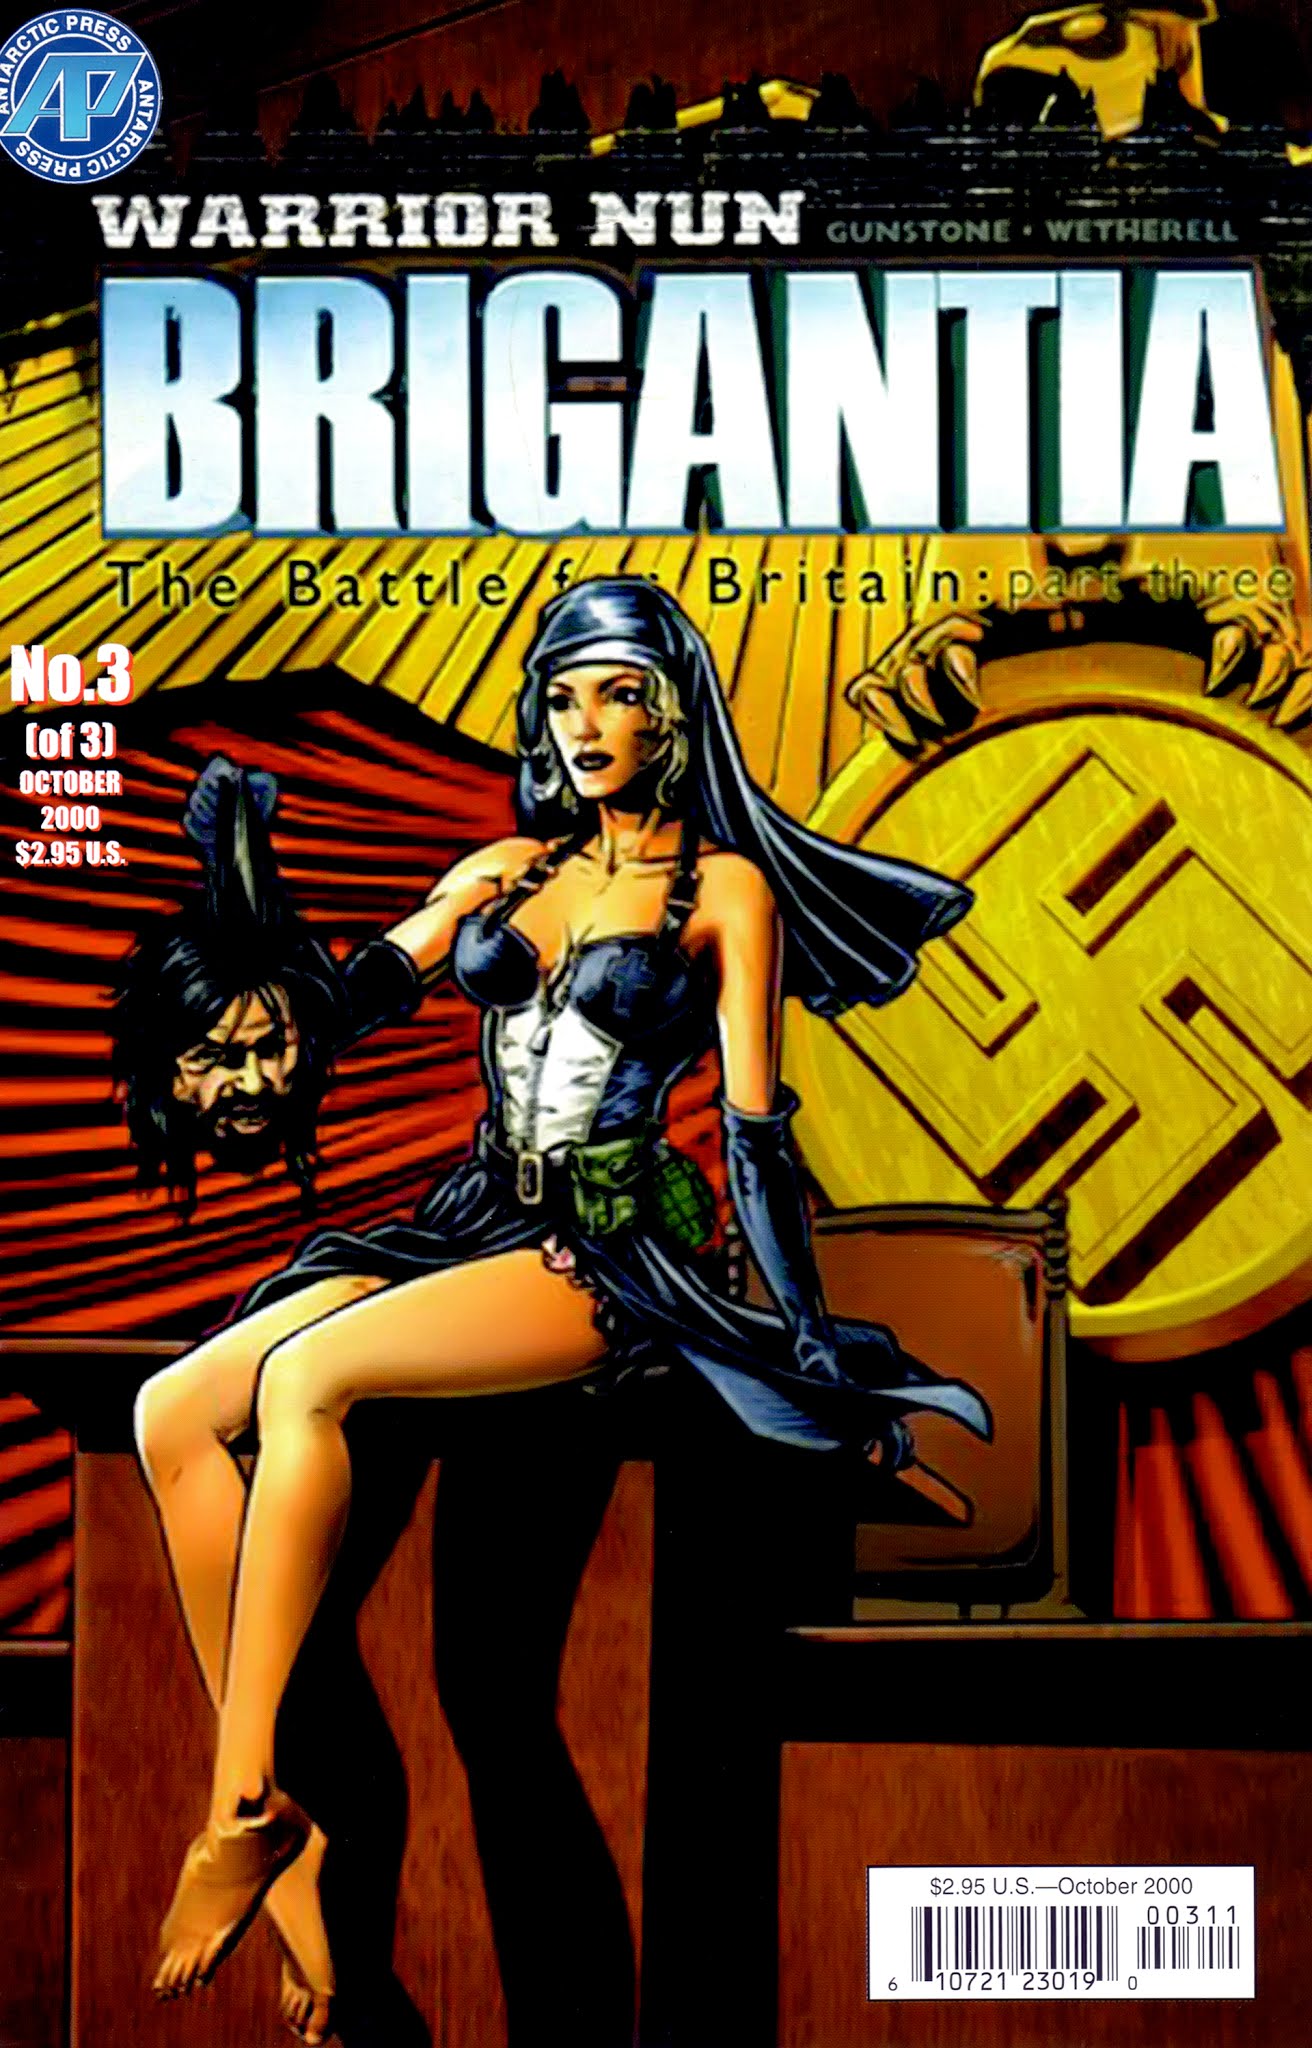 Read online Warrior Nun Brigantia comic -  Issue #3 - 1